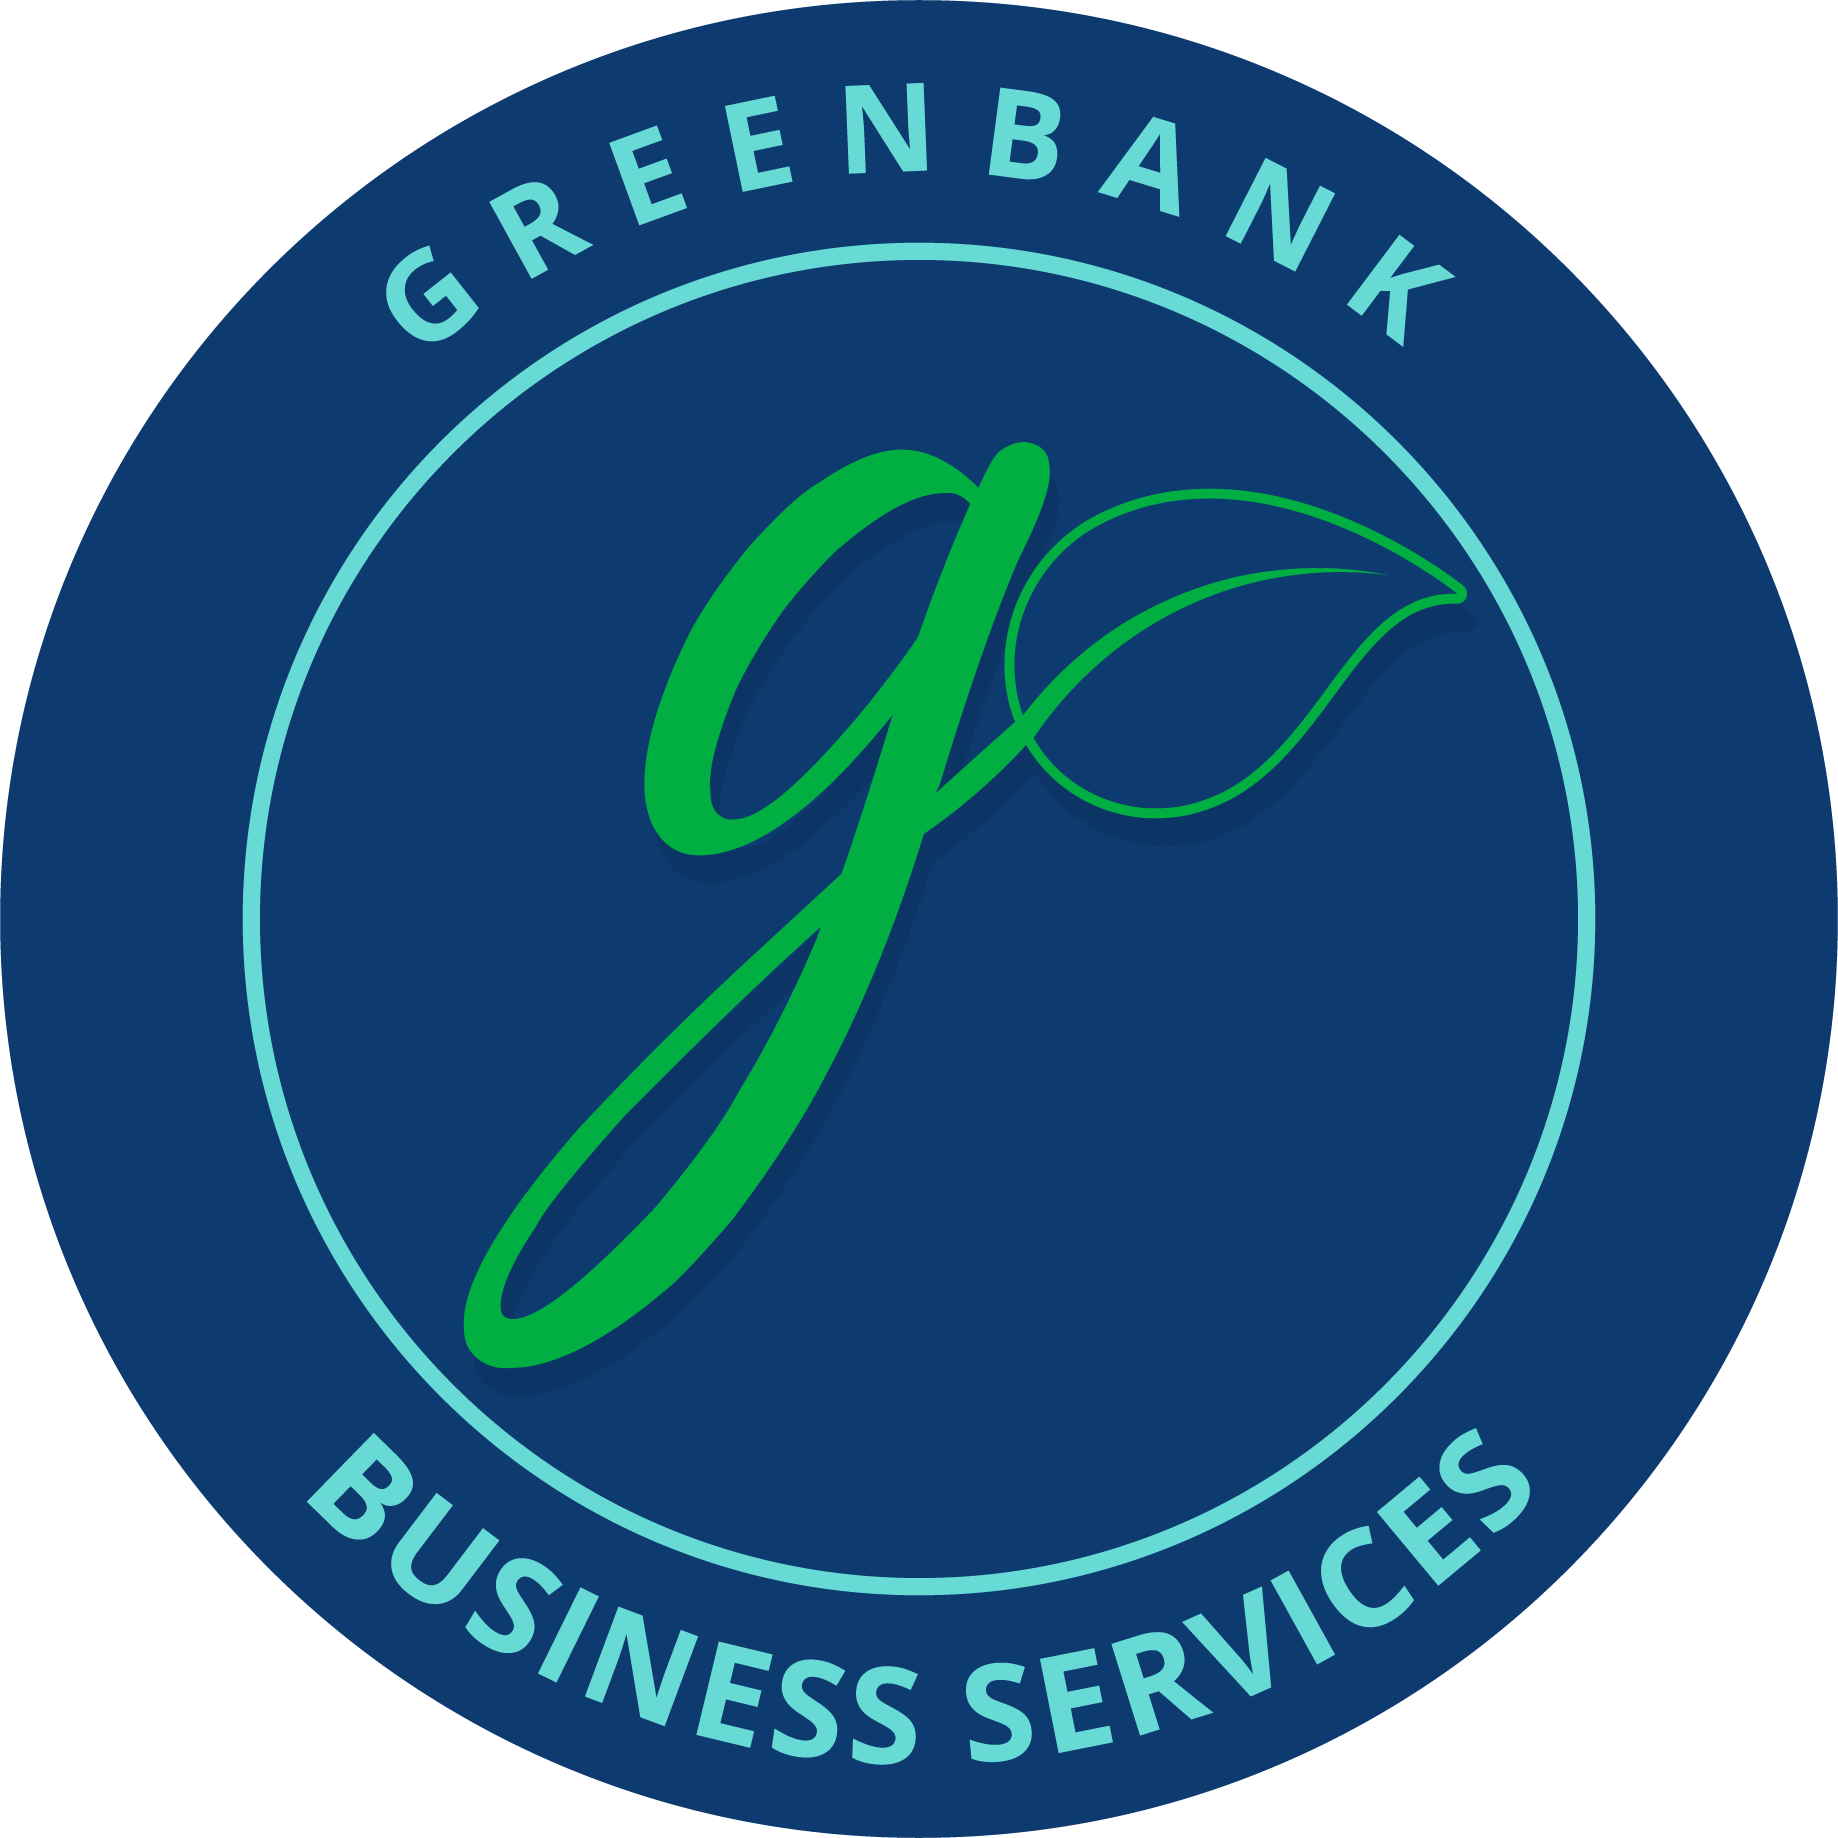 Greenbank Business Services